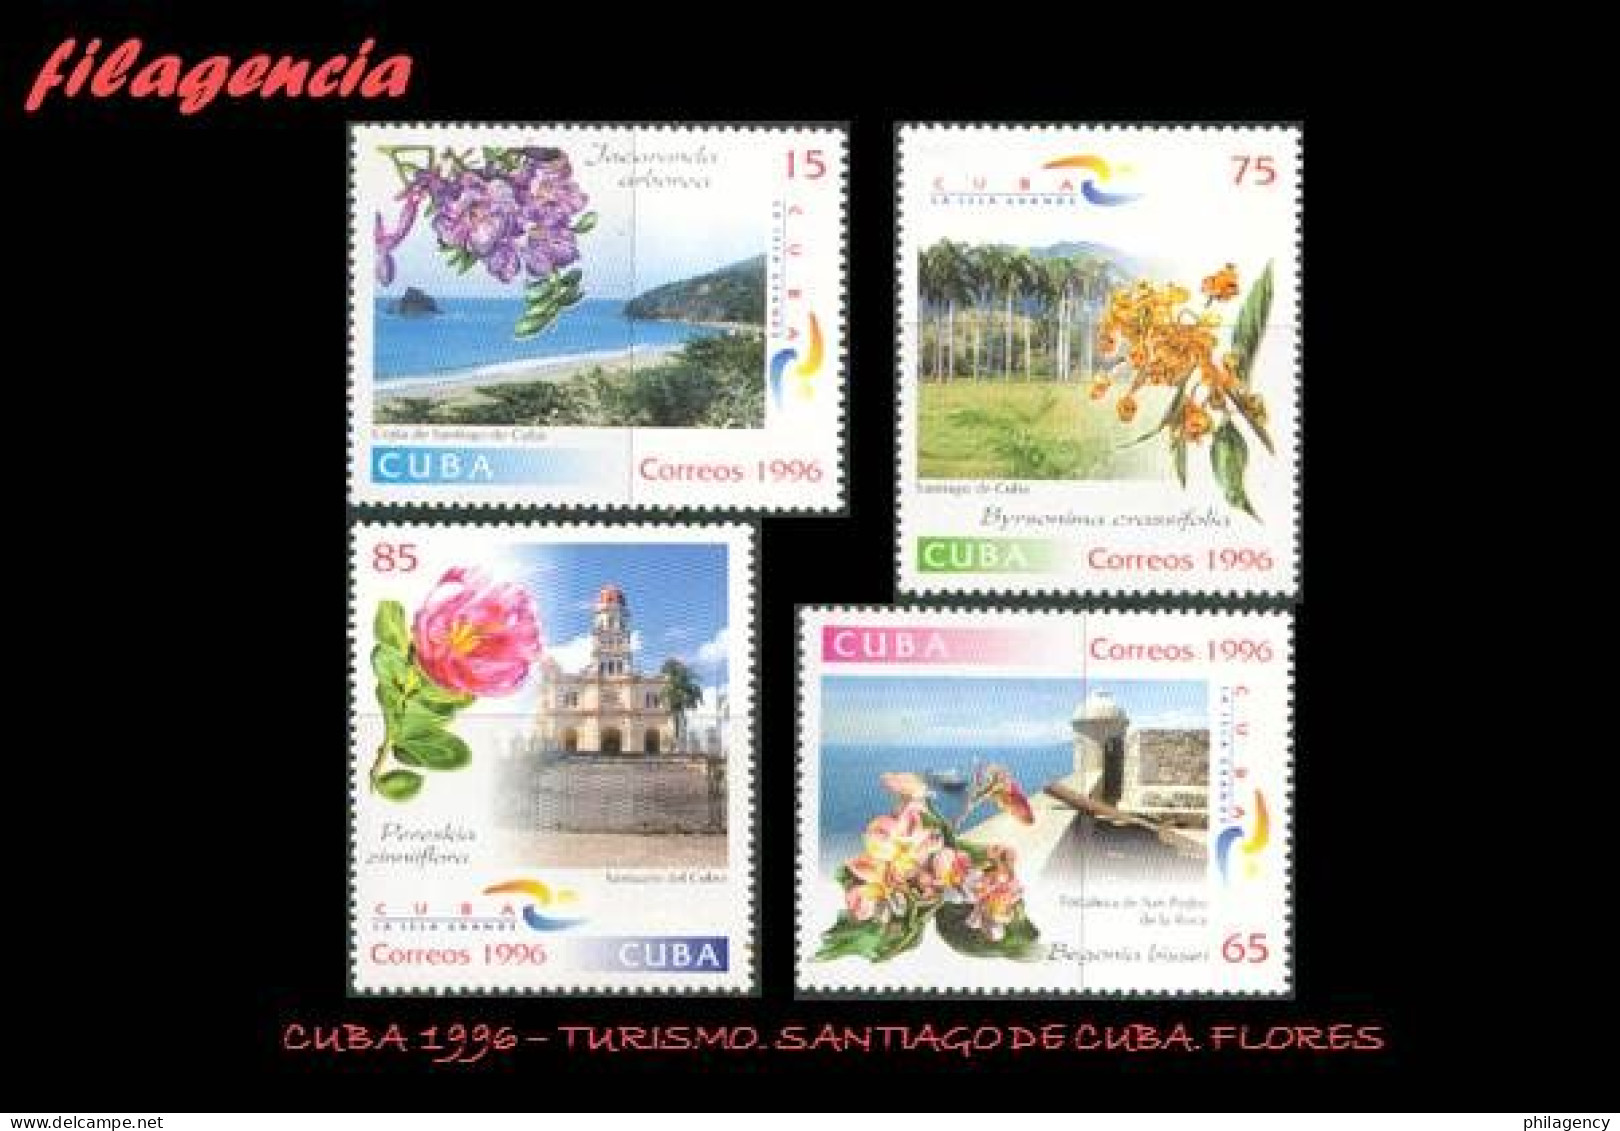 CUBA MINT. 1996-15 TURISMO. SANTIAGO DE CUBA. FLORES - Nuevos